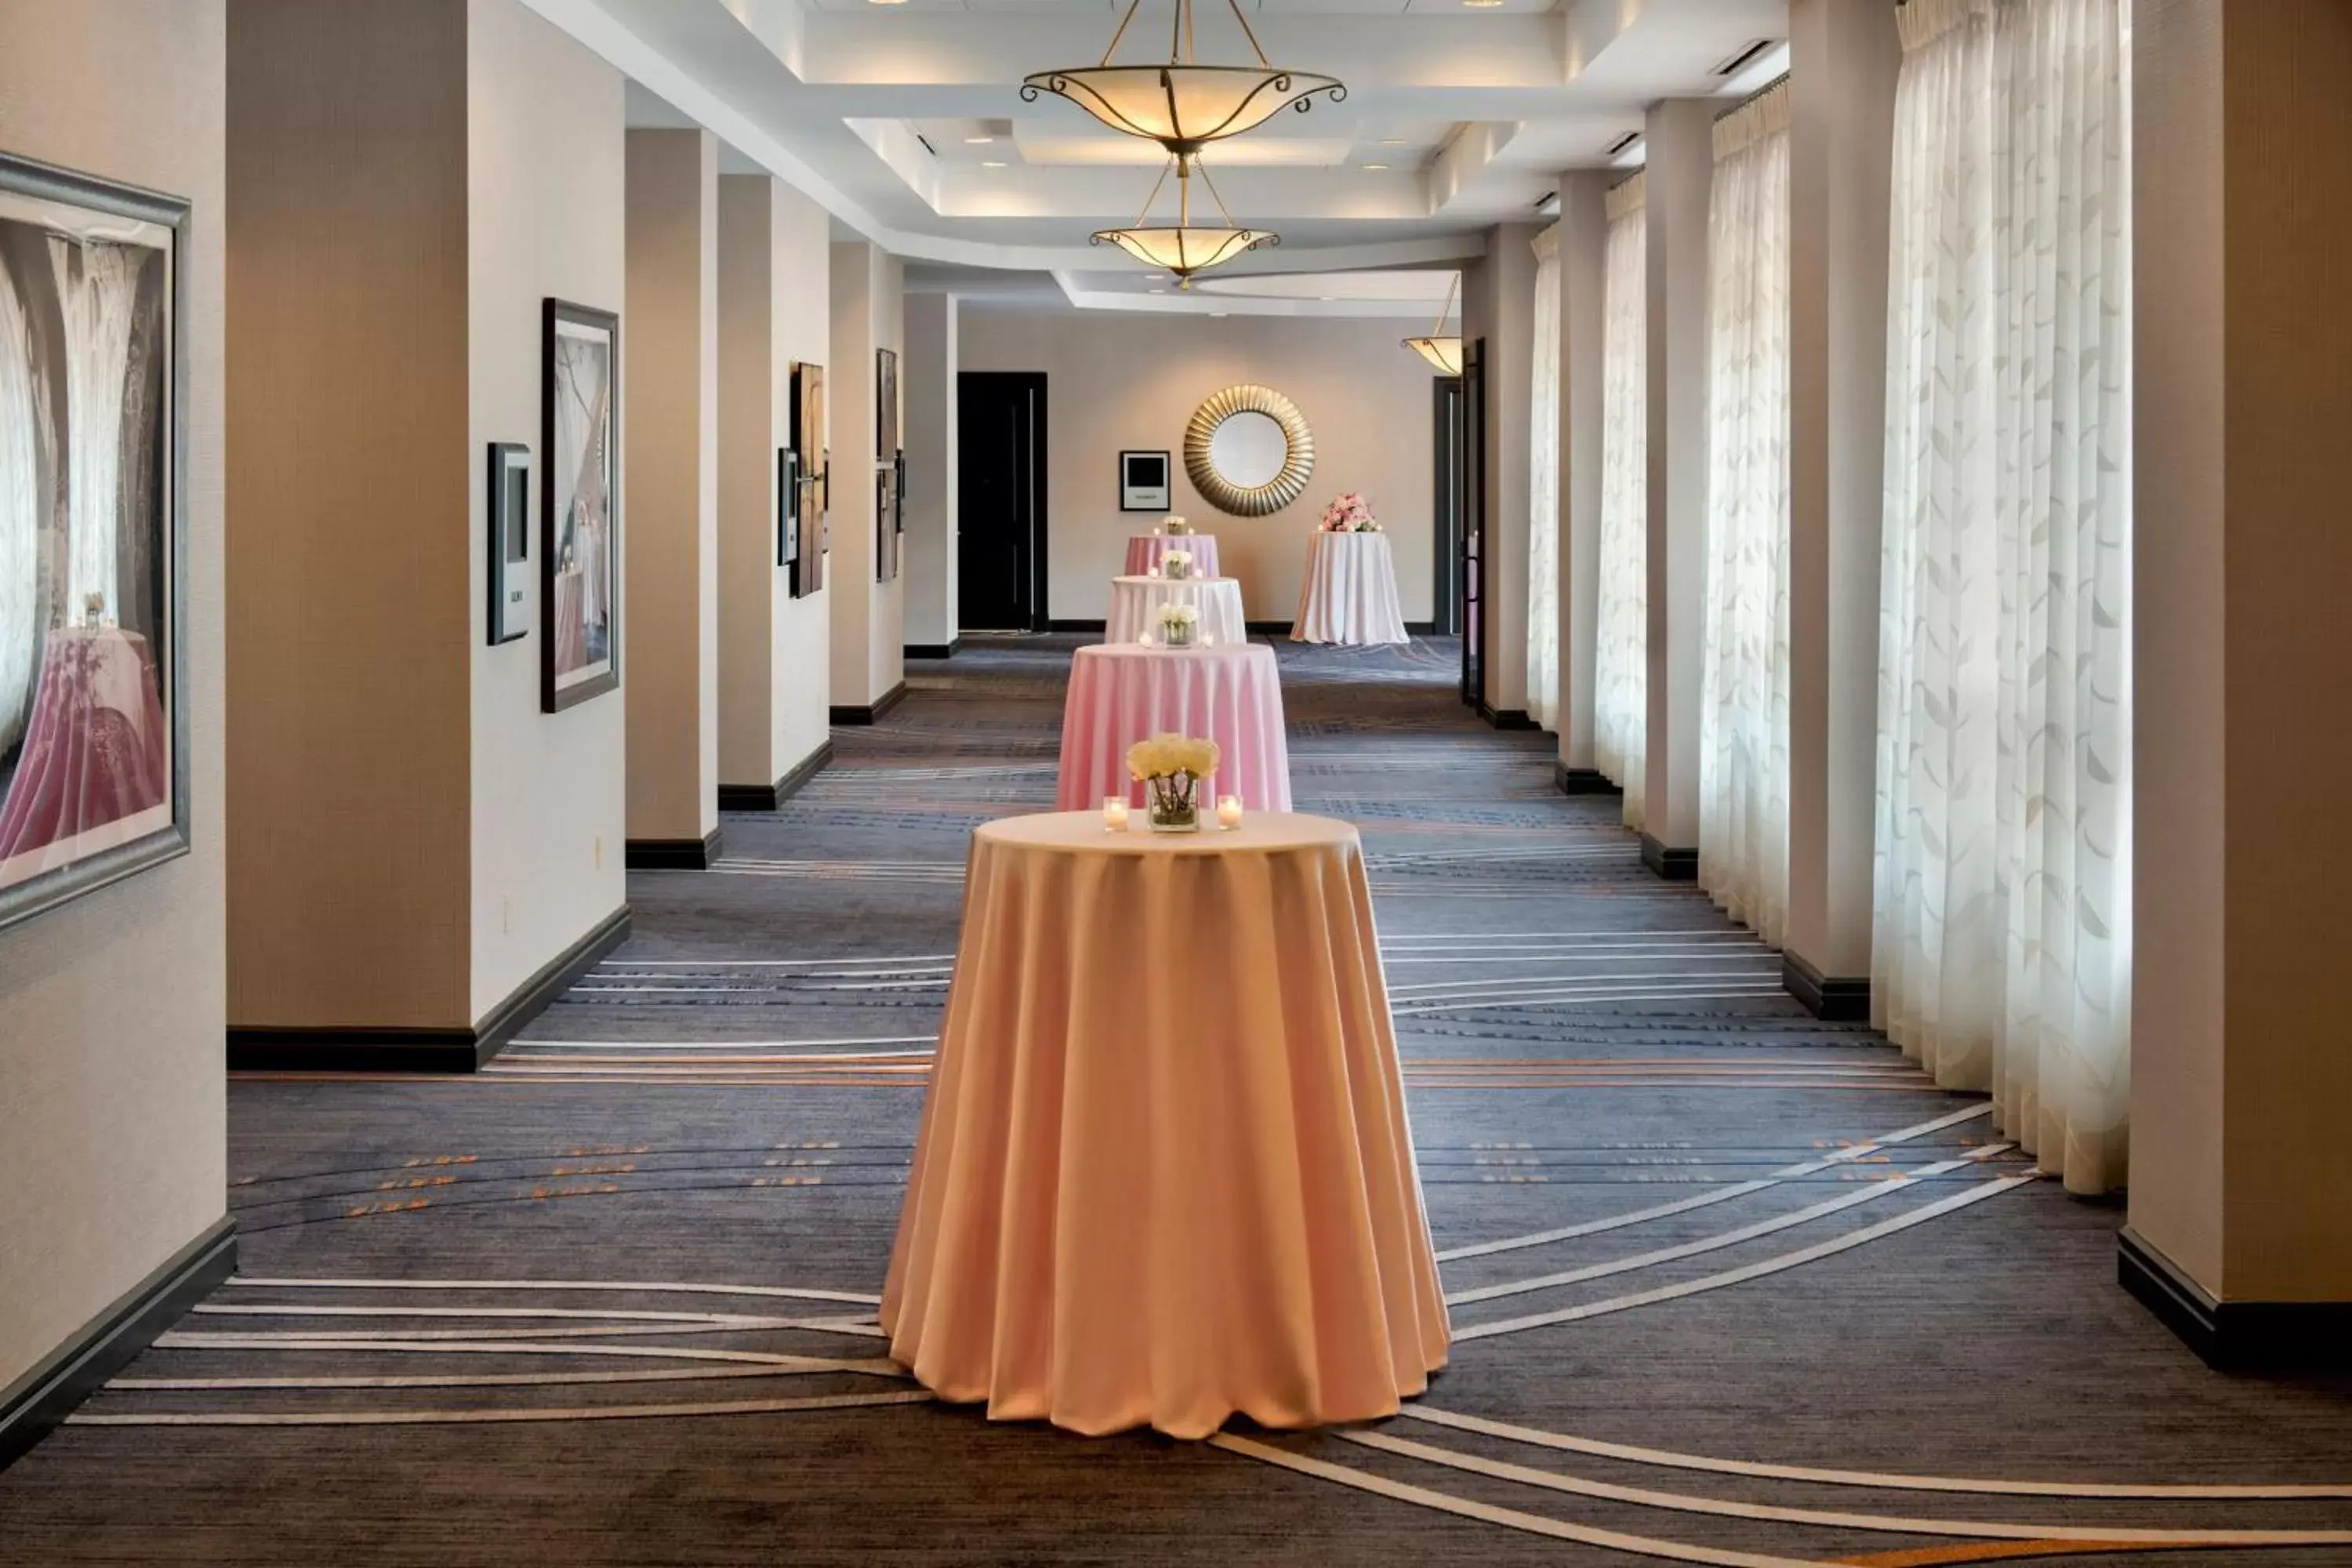 Meeting/conference room, Banquet Facilities in Marriott Philadelphia West